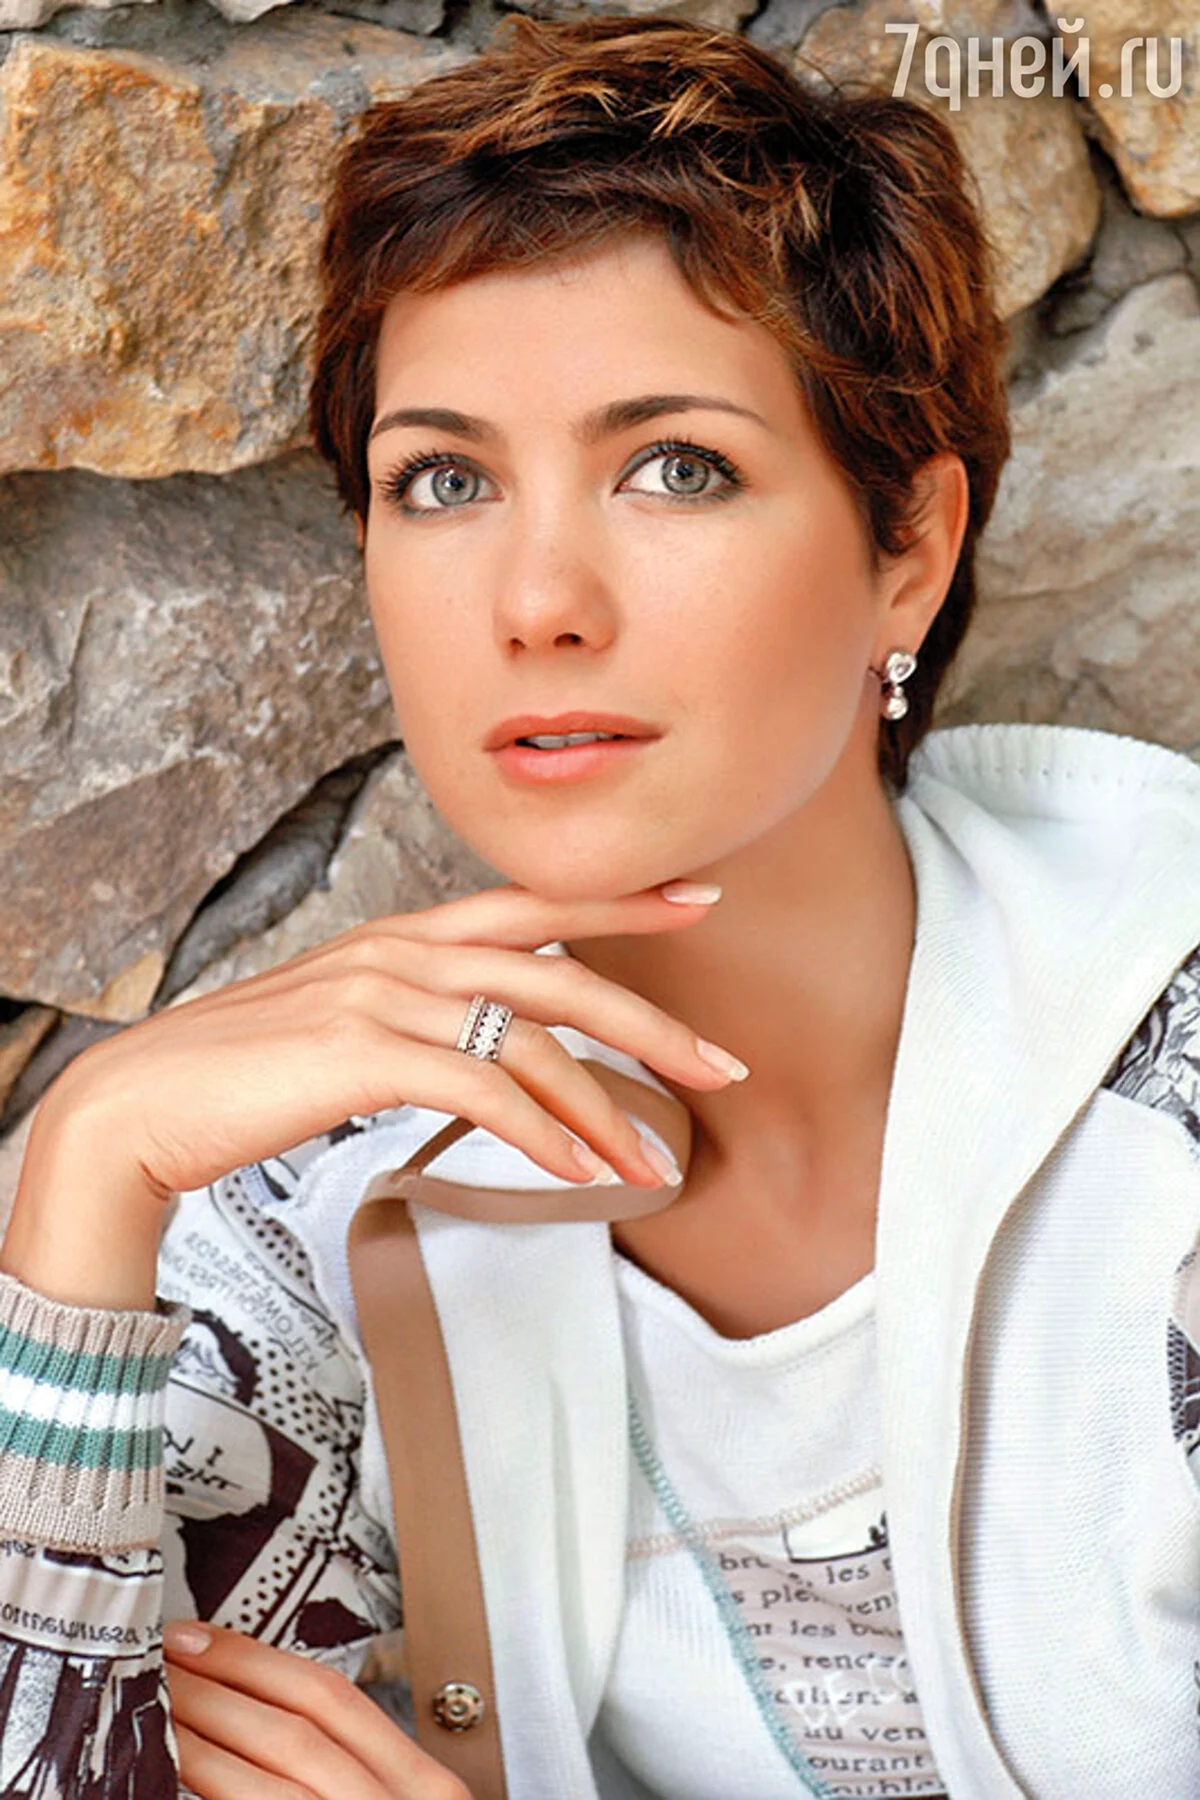 Екатерина Климова 2003